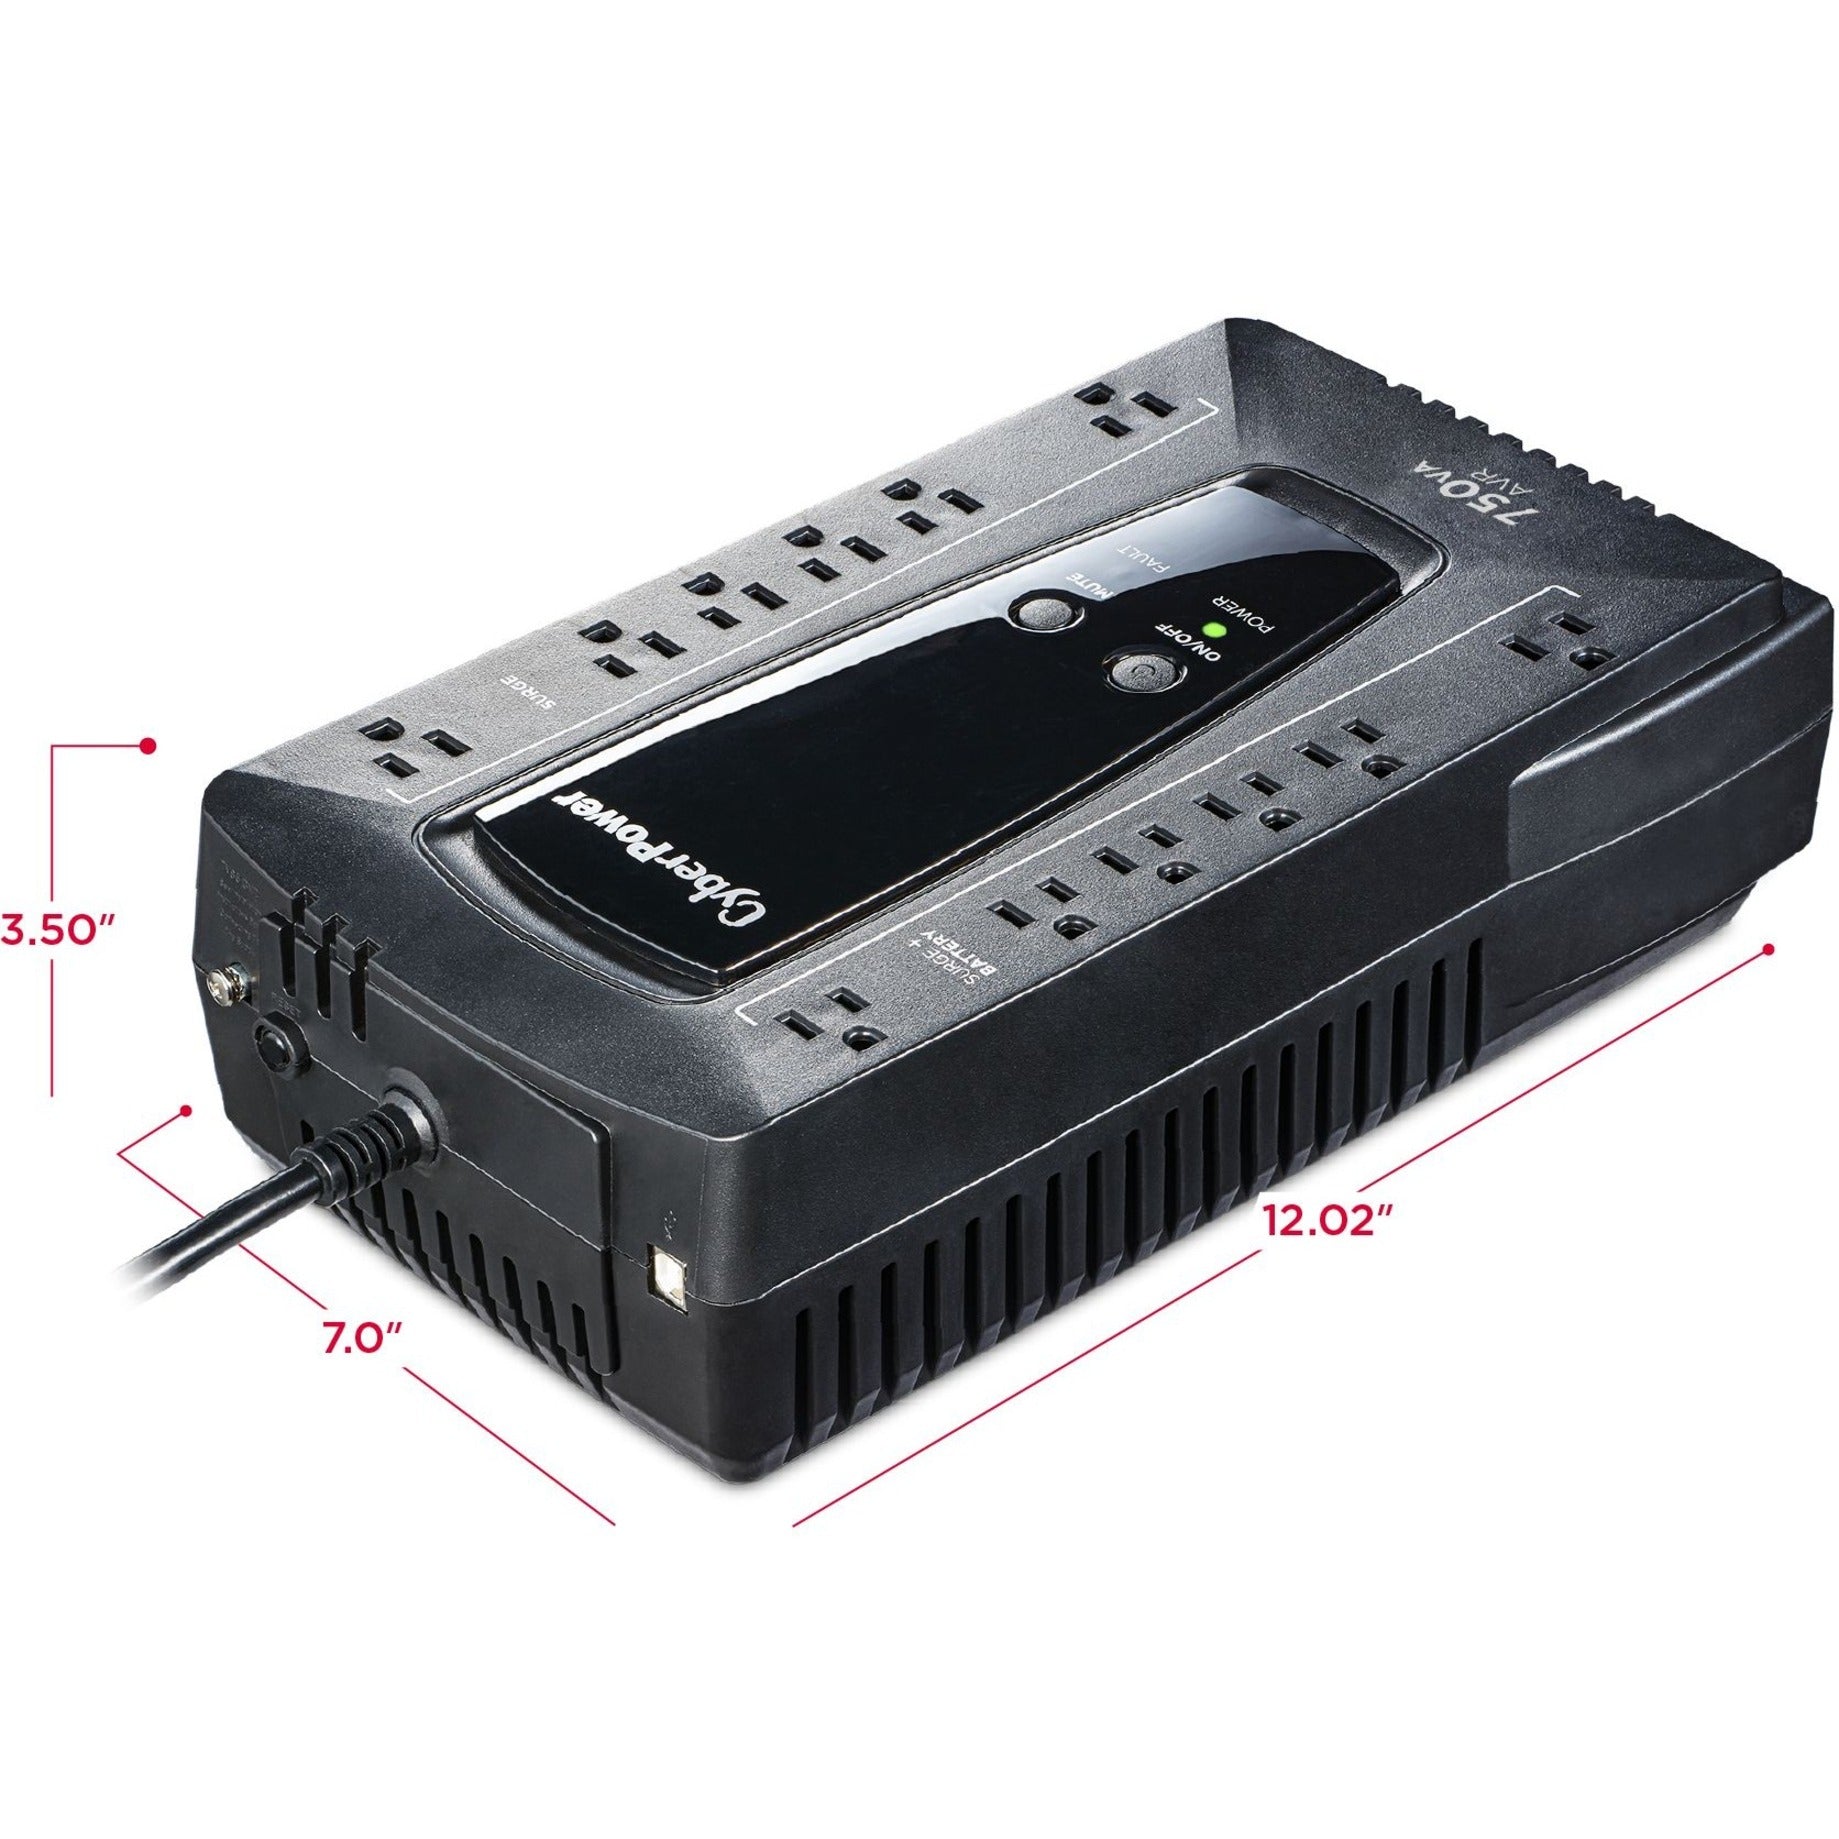 CyberPower AVRG900U AVR Series 900VA 480W Desktop UPS with AVR and USB, 3 Year Warranty, Low Battery Alarm